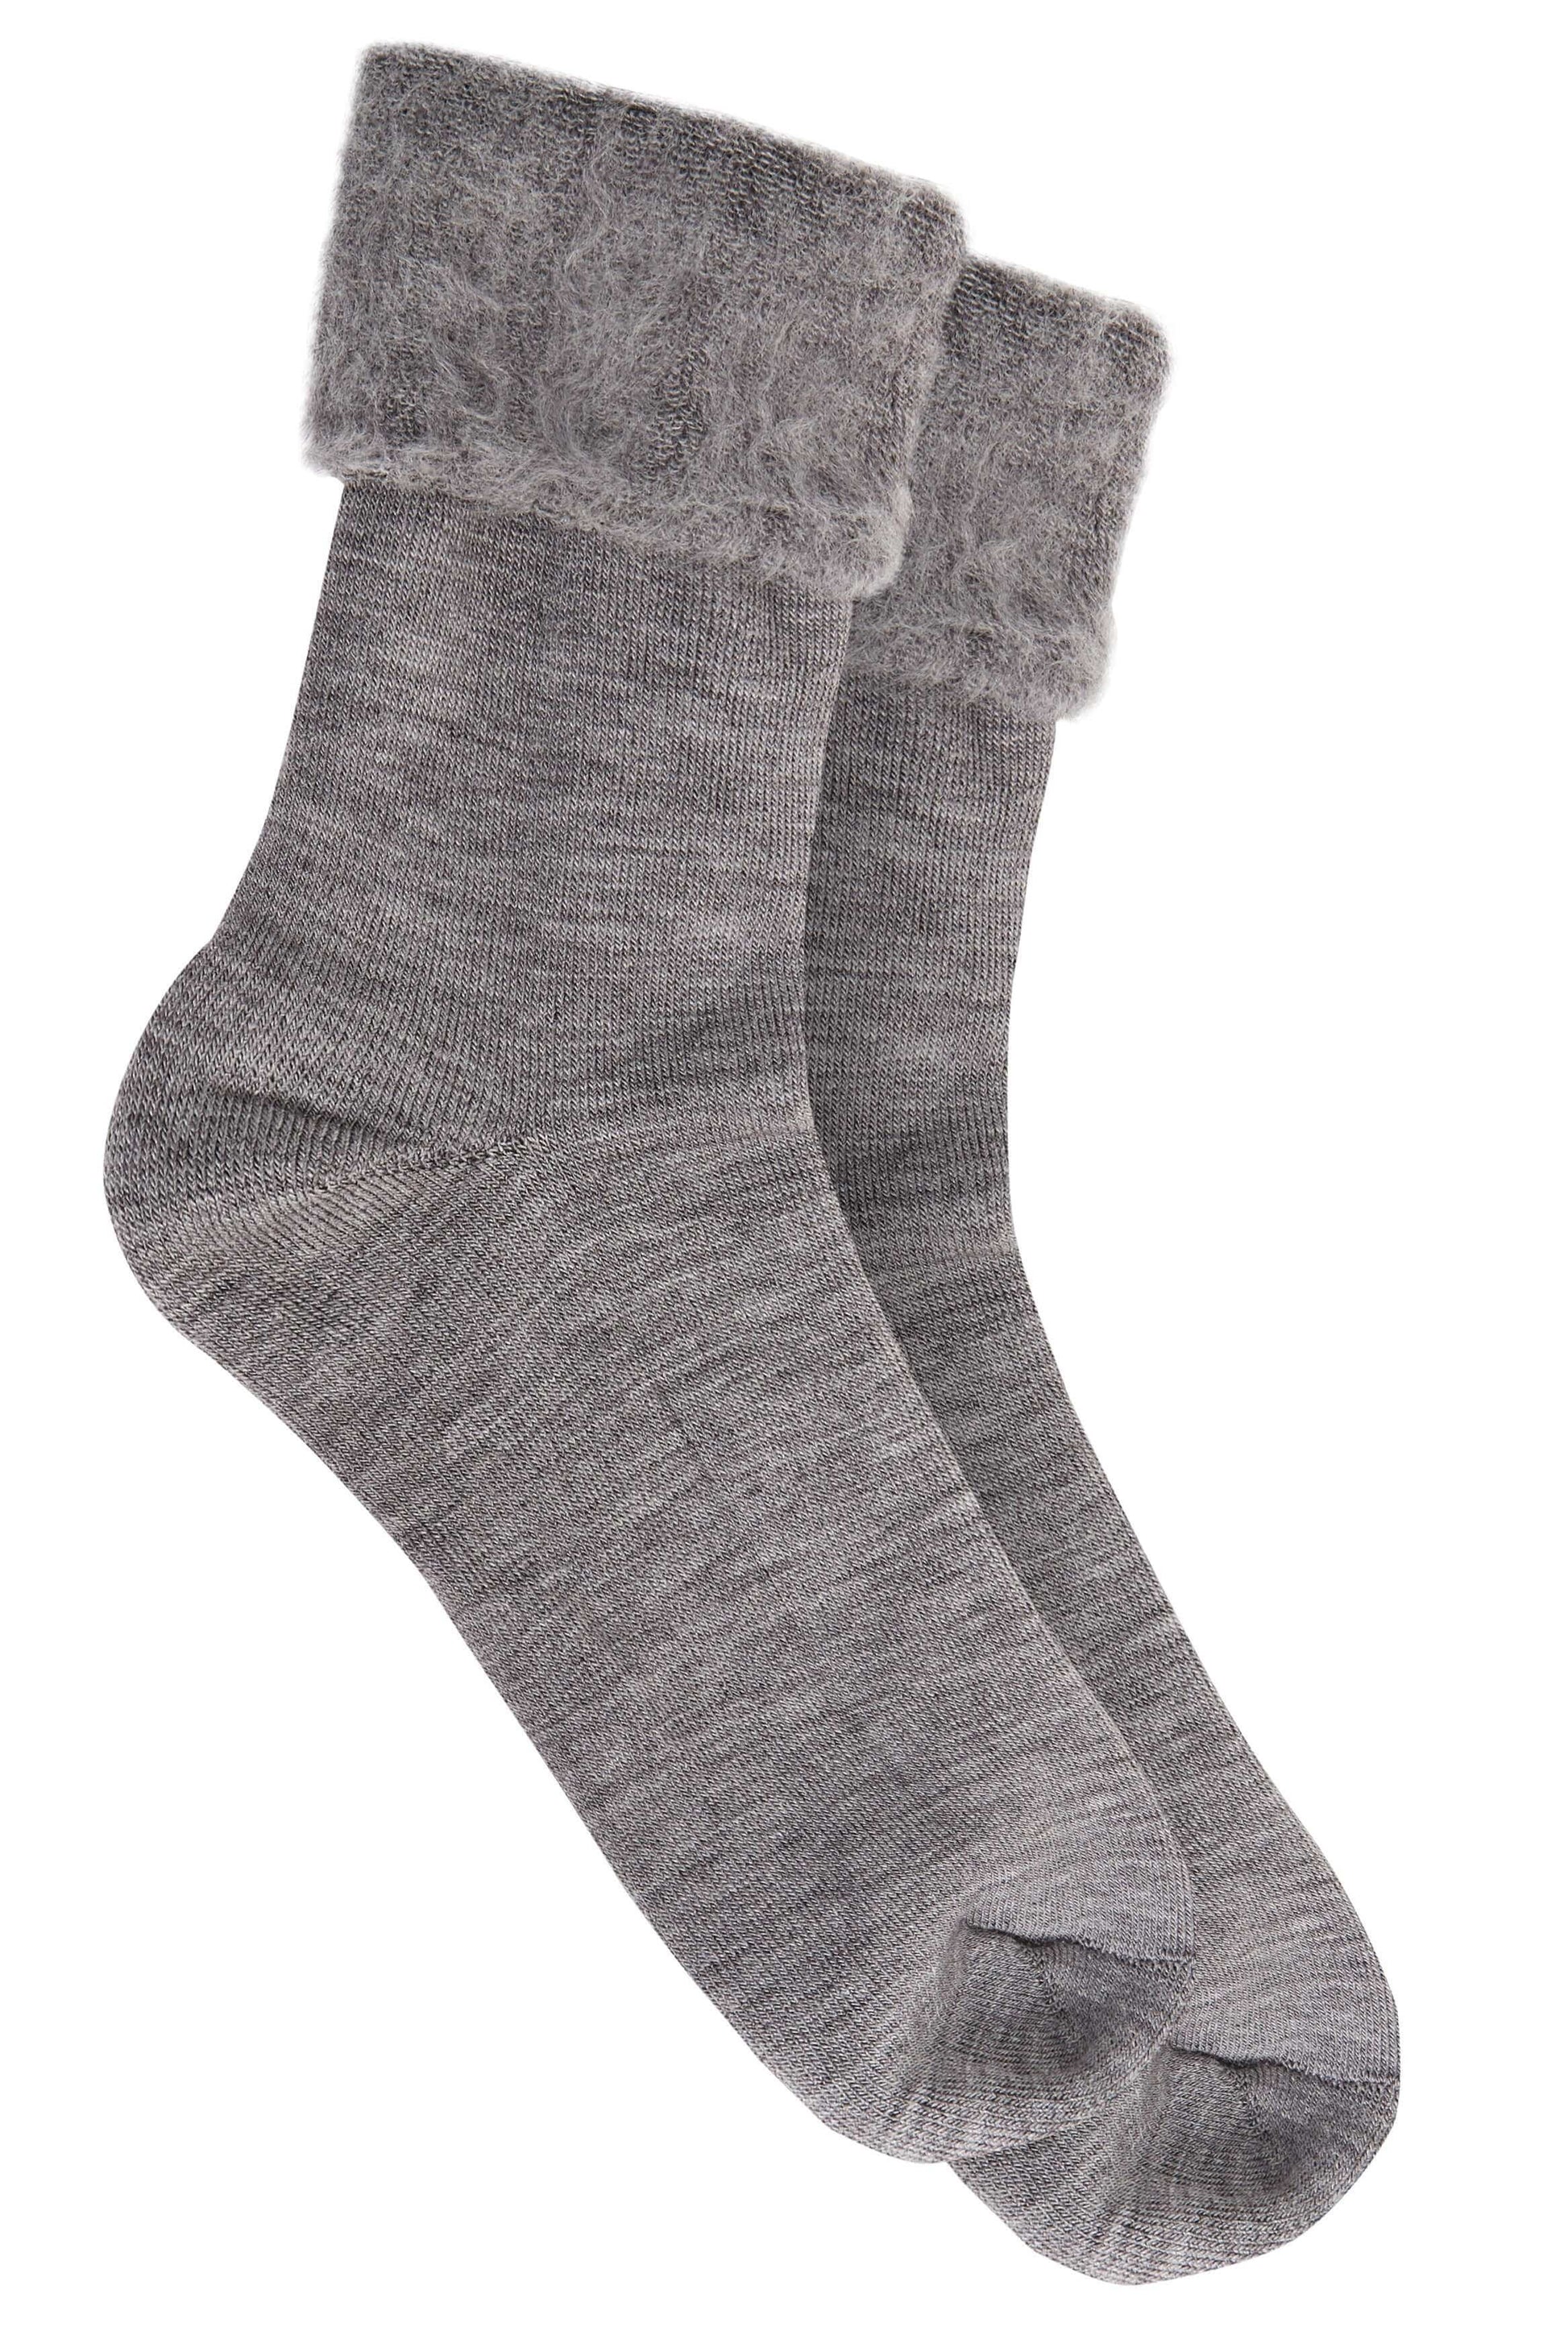 Pack Of 6 Men's Thermal Bed Socks Super Soft Fluffy Socks. Buy now for £12.00. A Socks by Sock Stack. 6-11, assorted, black, black socks, blue, boot socks, brown, burgandy, charcoal, christmas, cosy, designer, fluffy, footwear, grey, grey socks, mens, men